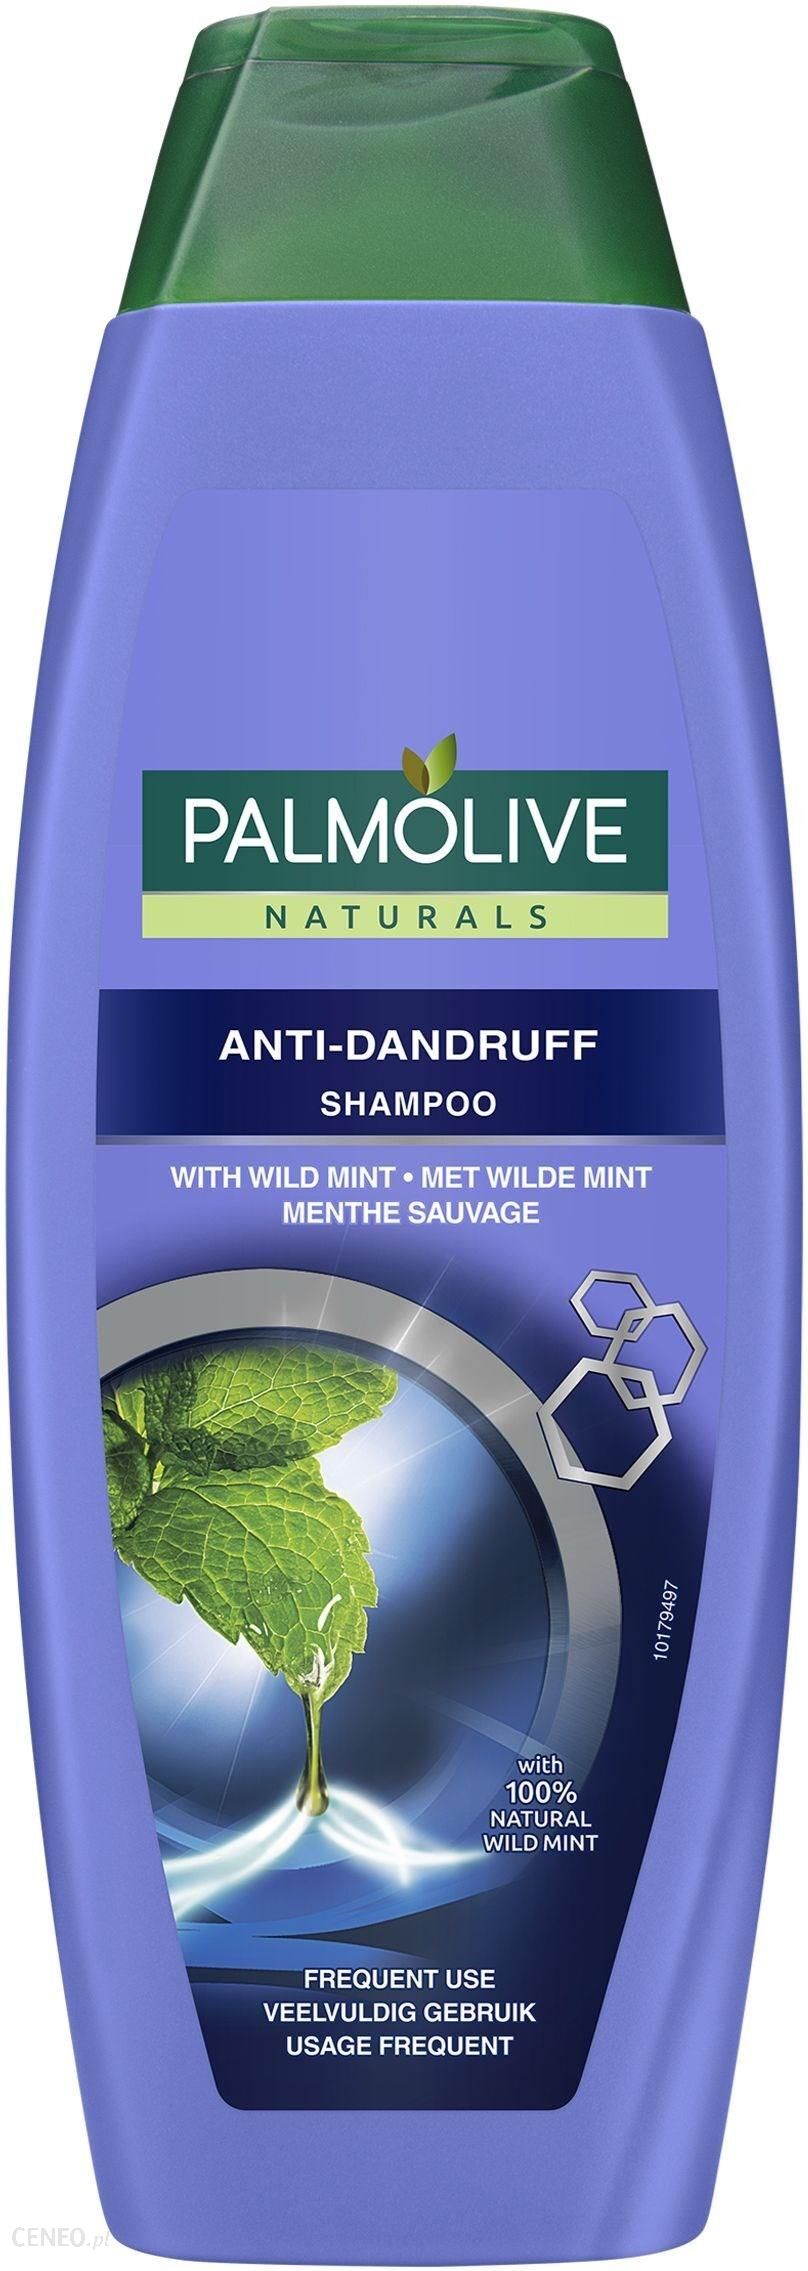 szampon palmolive 350ml cena